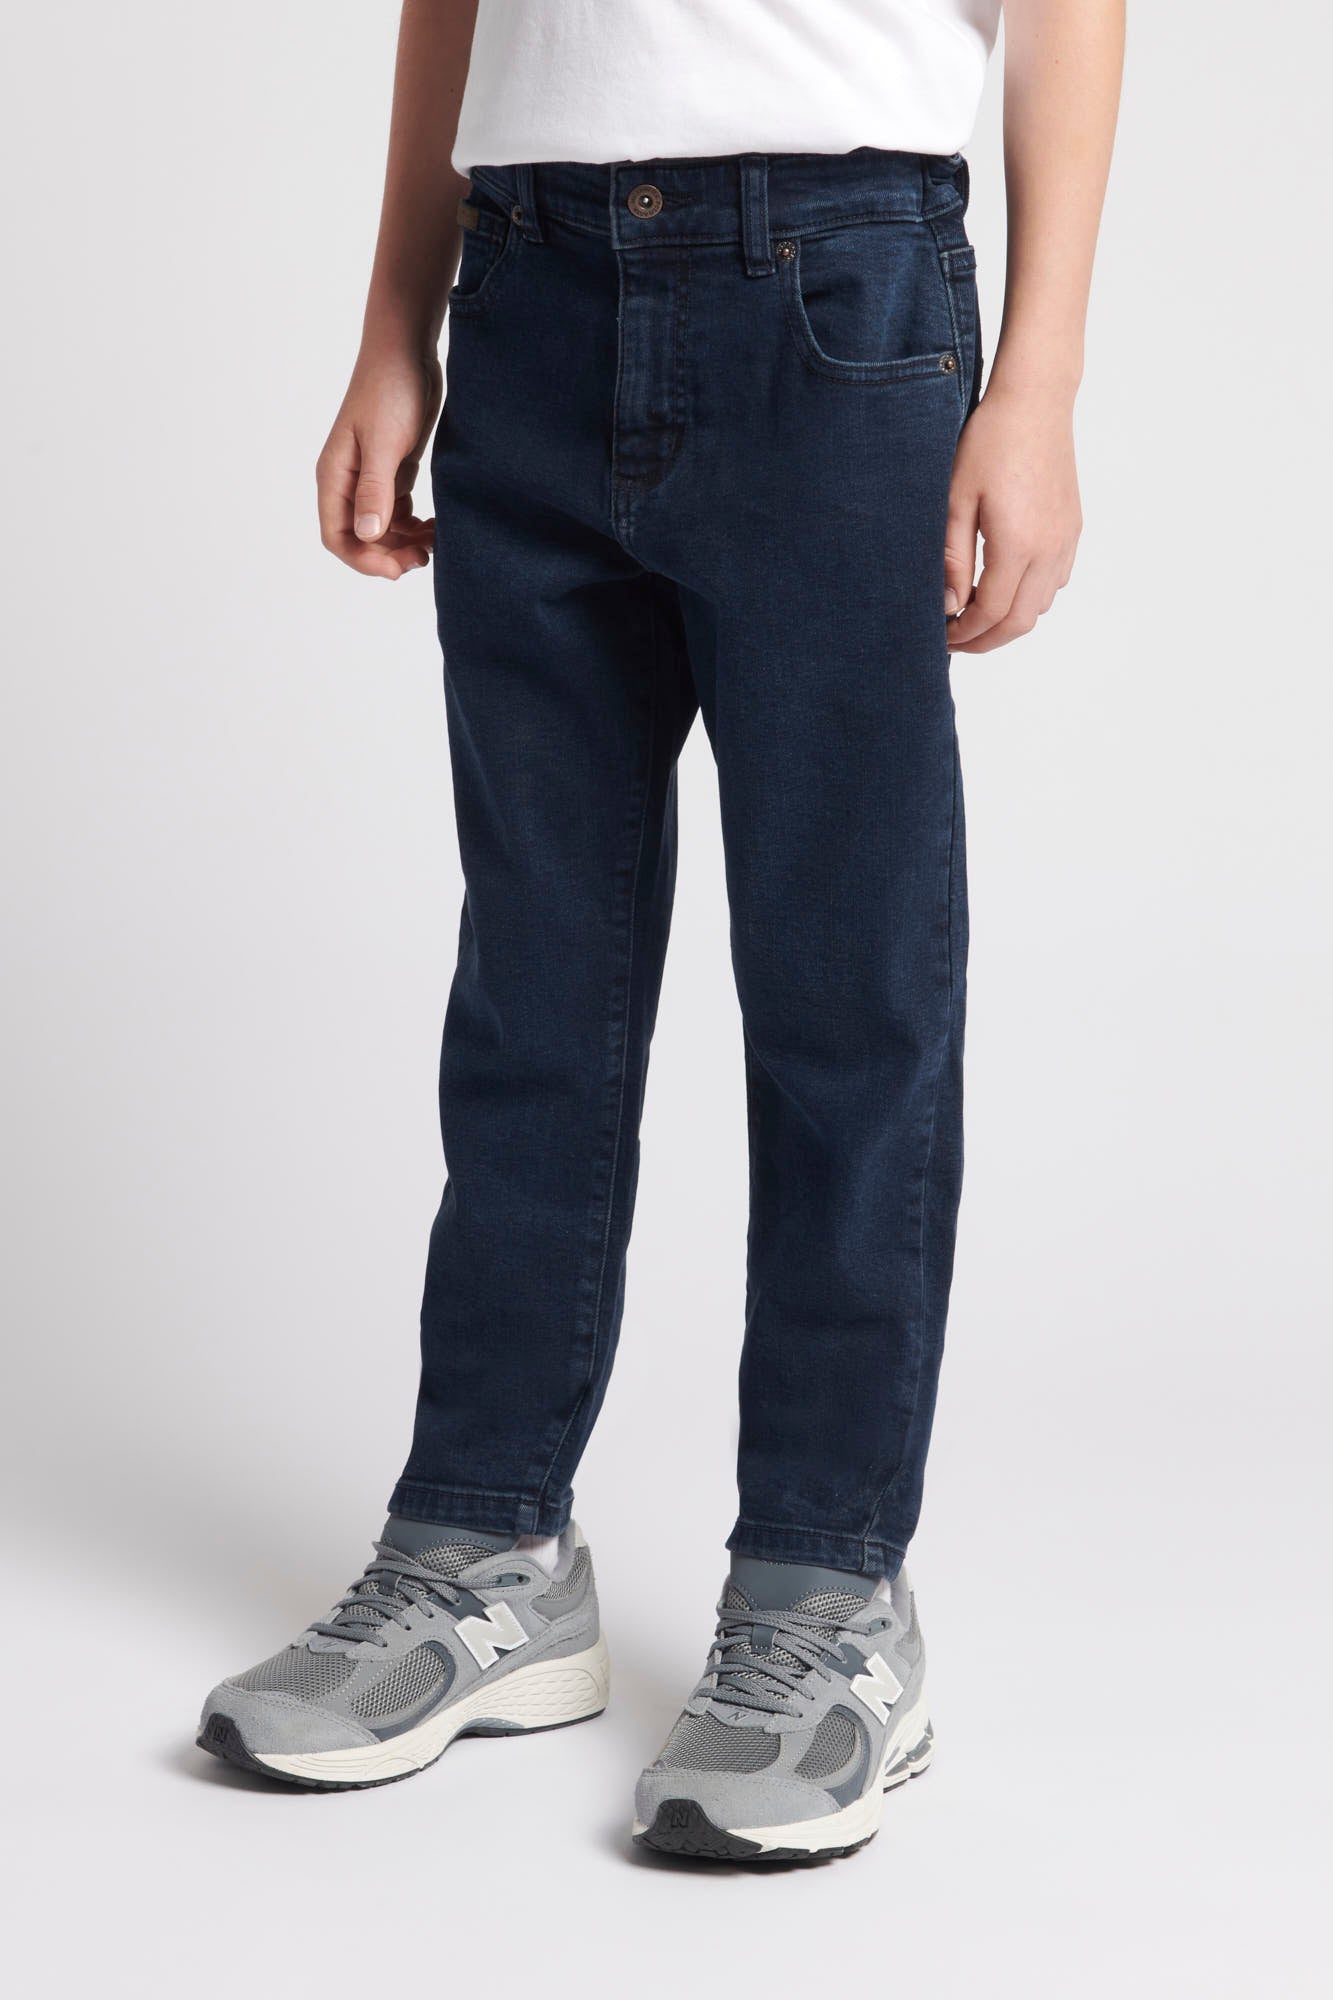 U.S. Polo Assn. Boys 5 Pocket Slim Fit Denim Jeans in Dark Vintage Wash